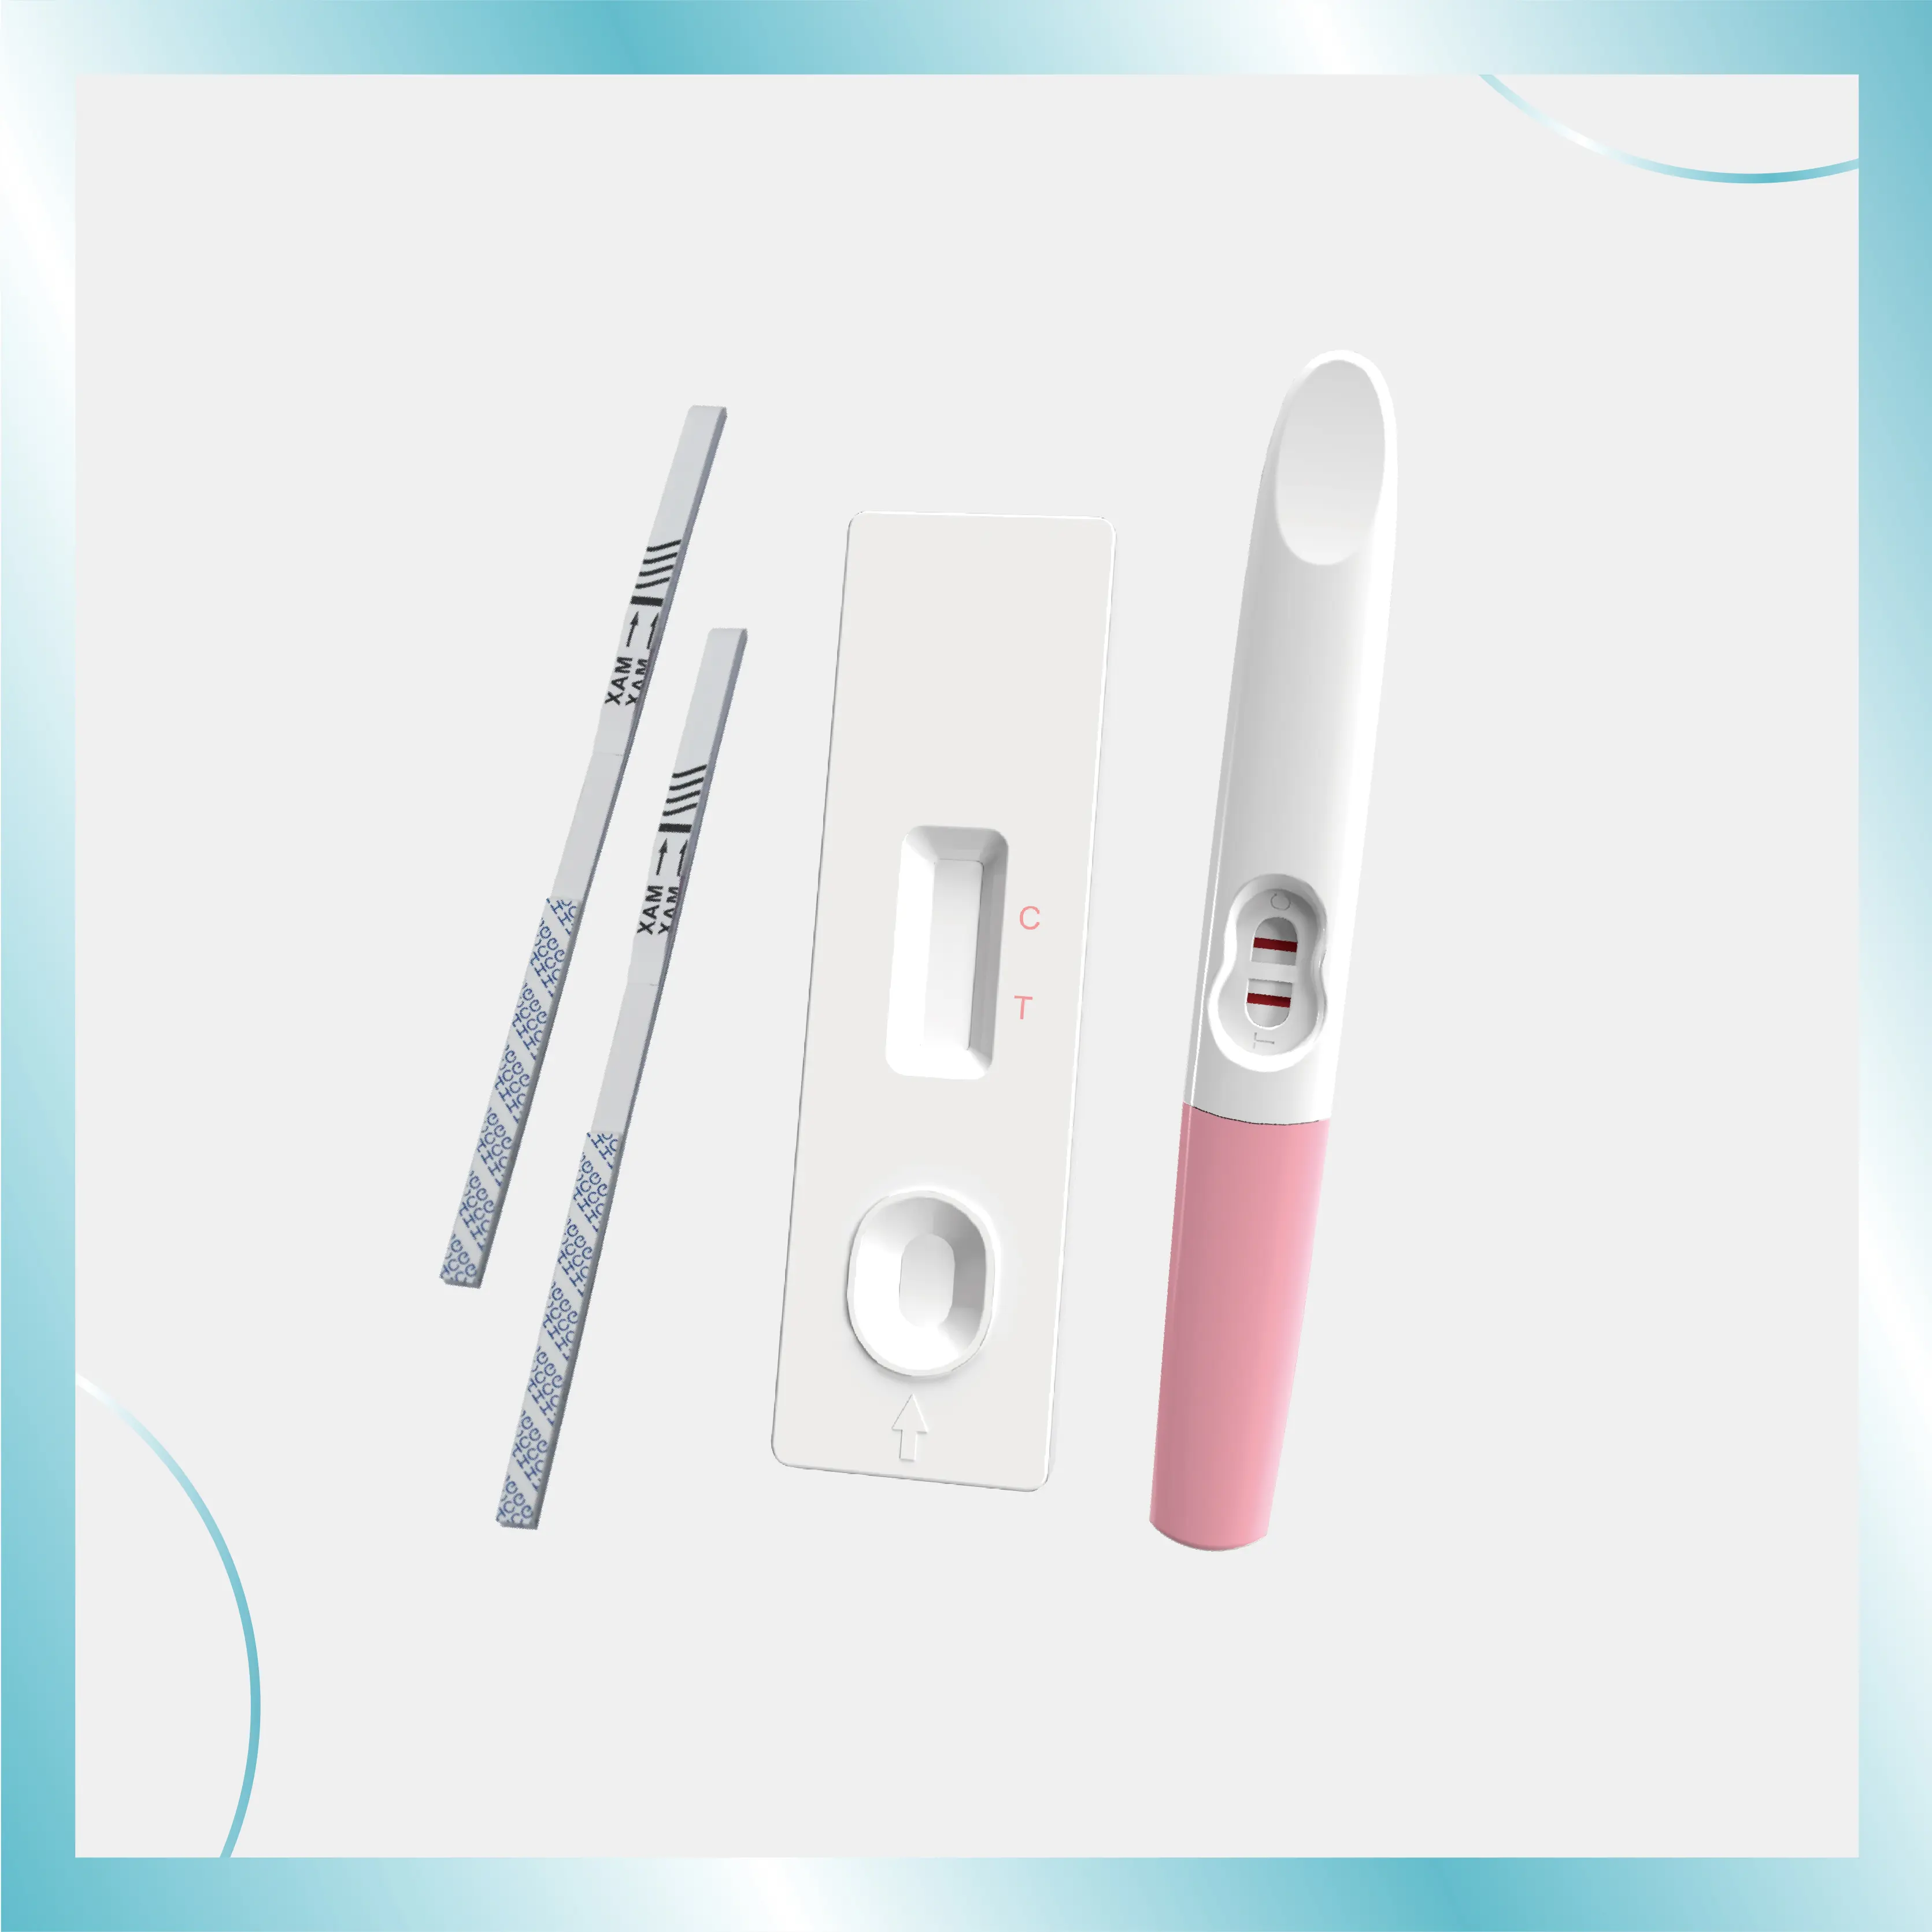 Ovulation / Fertility /Menopause Test